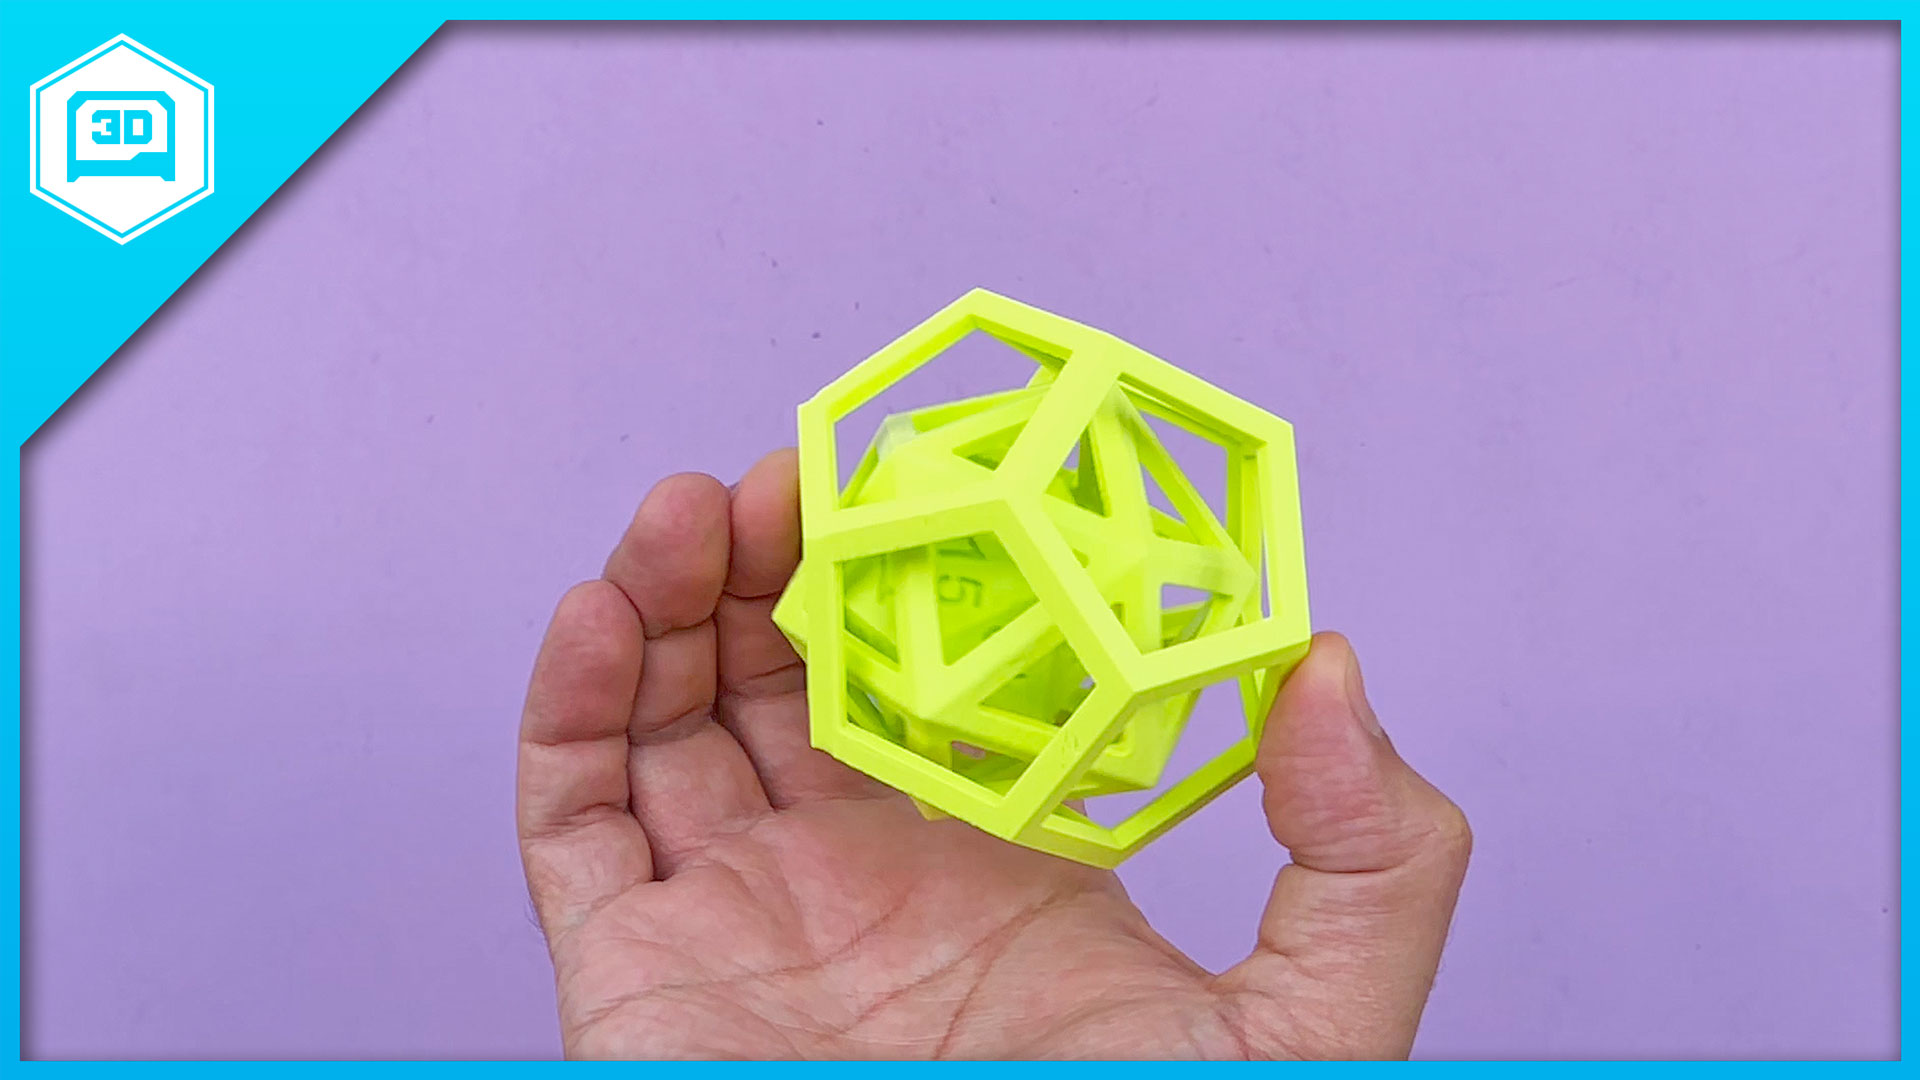 D20 inside icosahedron